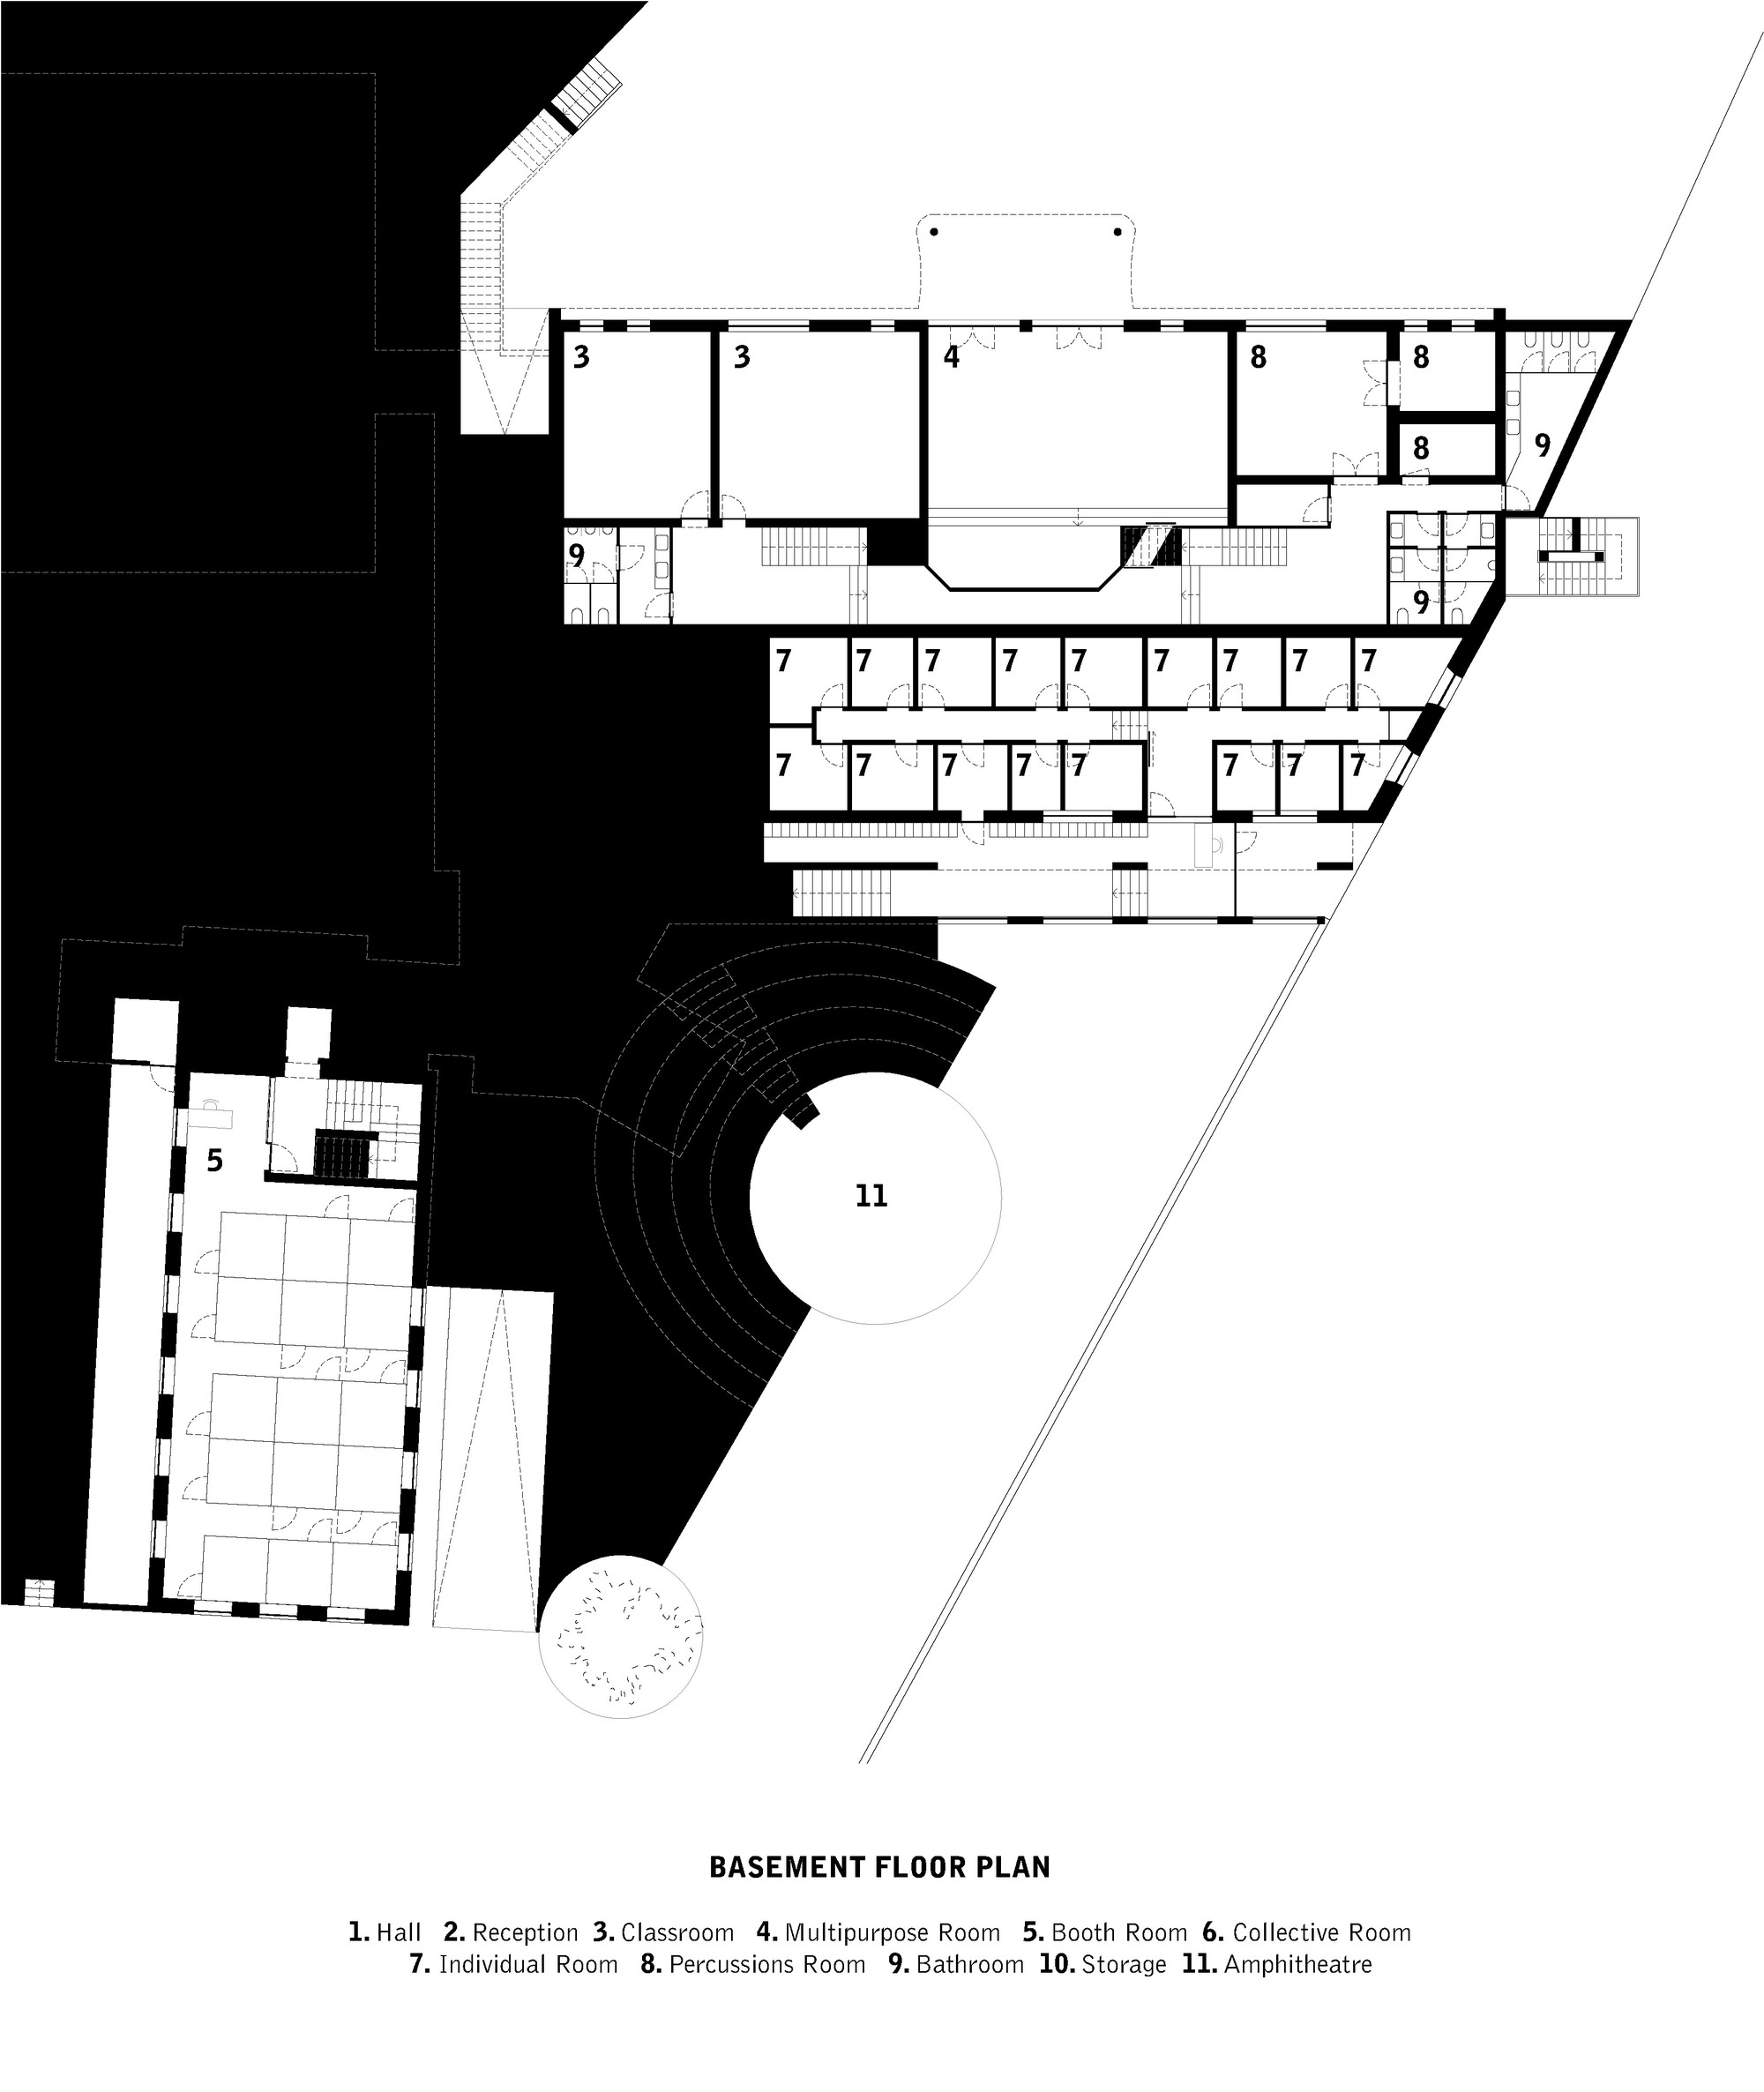 31_1_Basement_Floor_Plan.jpg